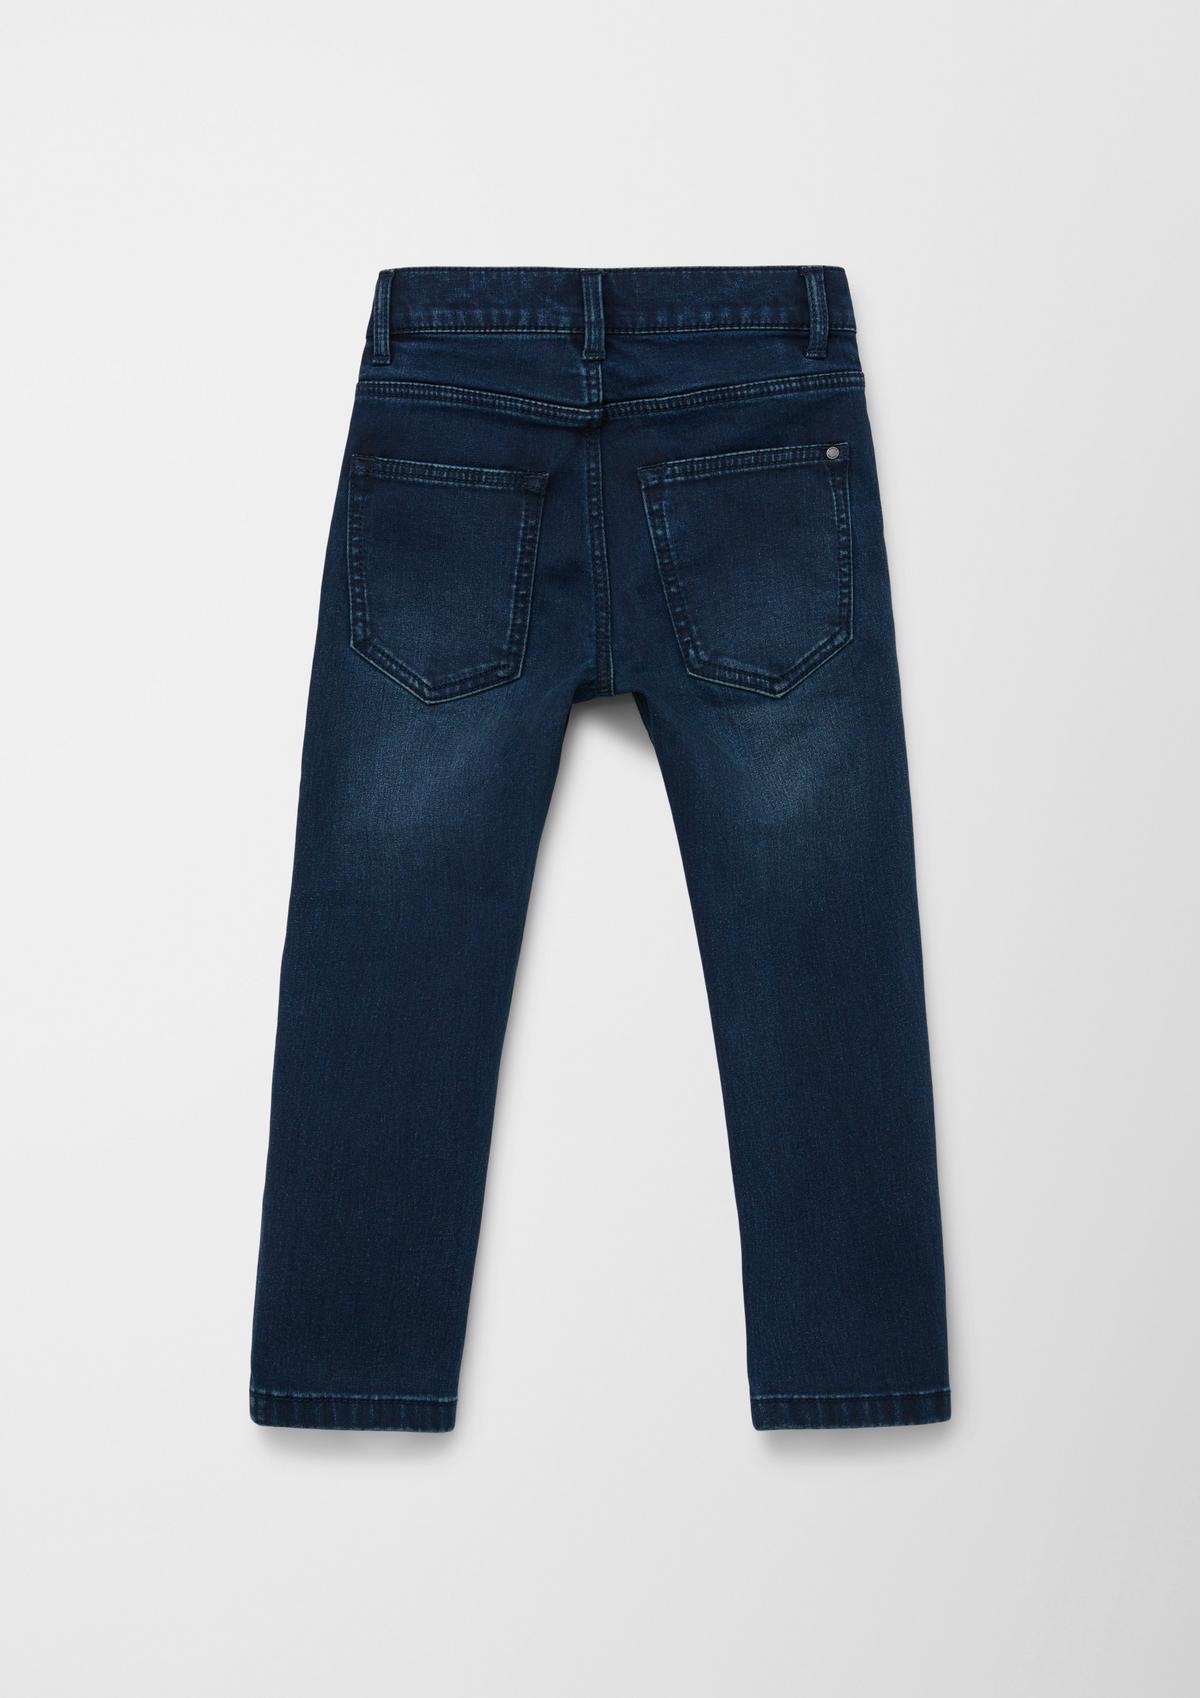 s.Oliver Jeans Pelle / Regular Fit / Mid Rise / Straight Leg / Used-Look